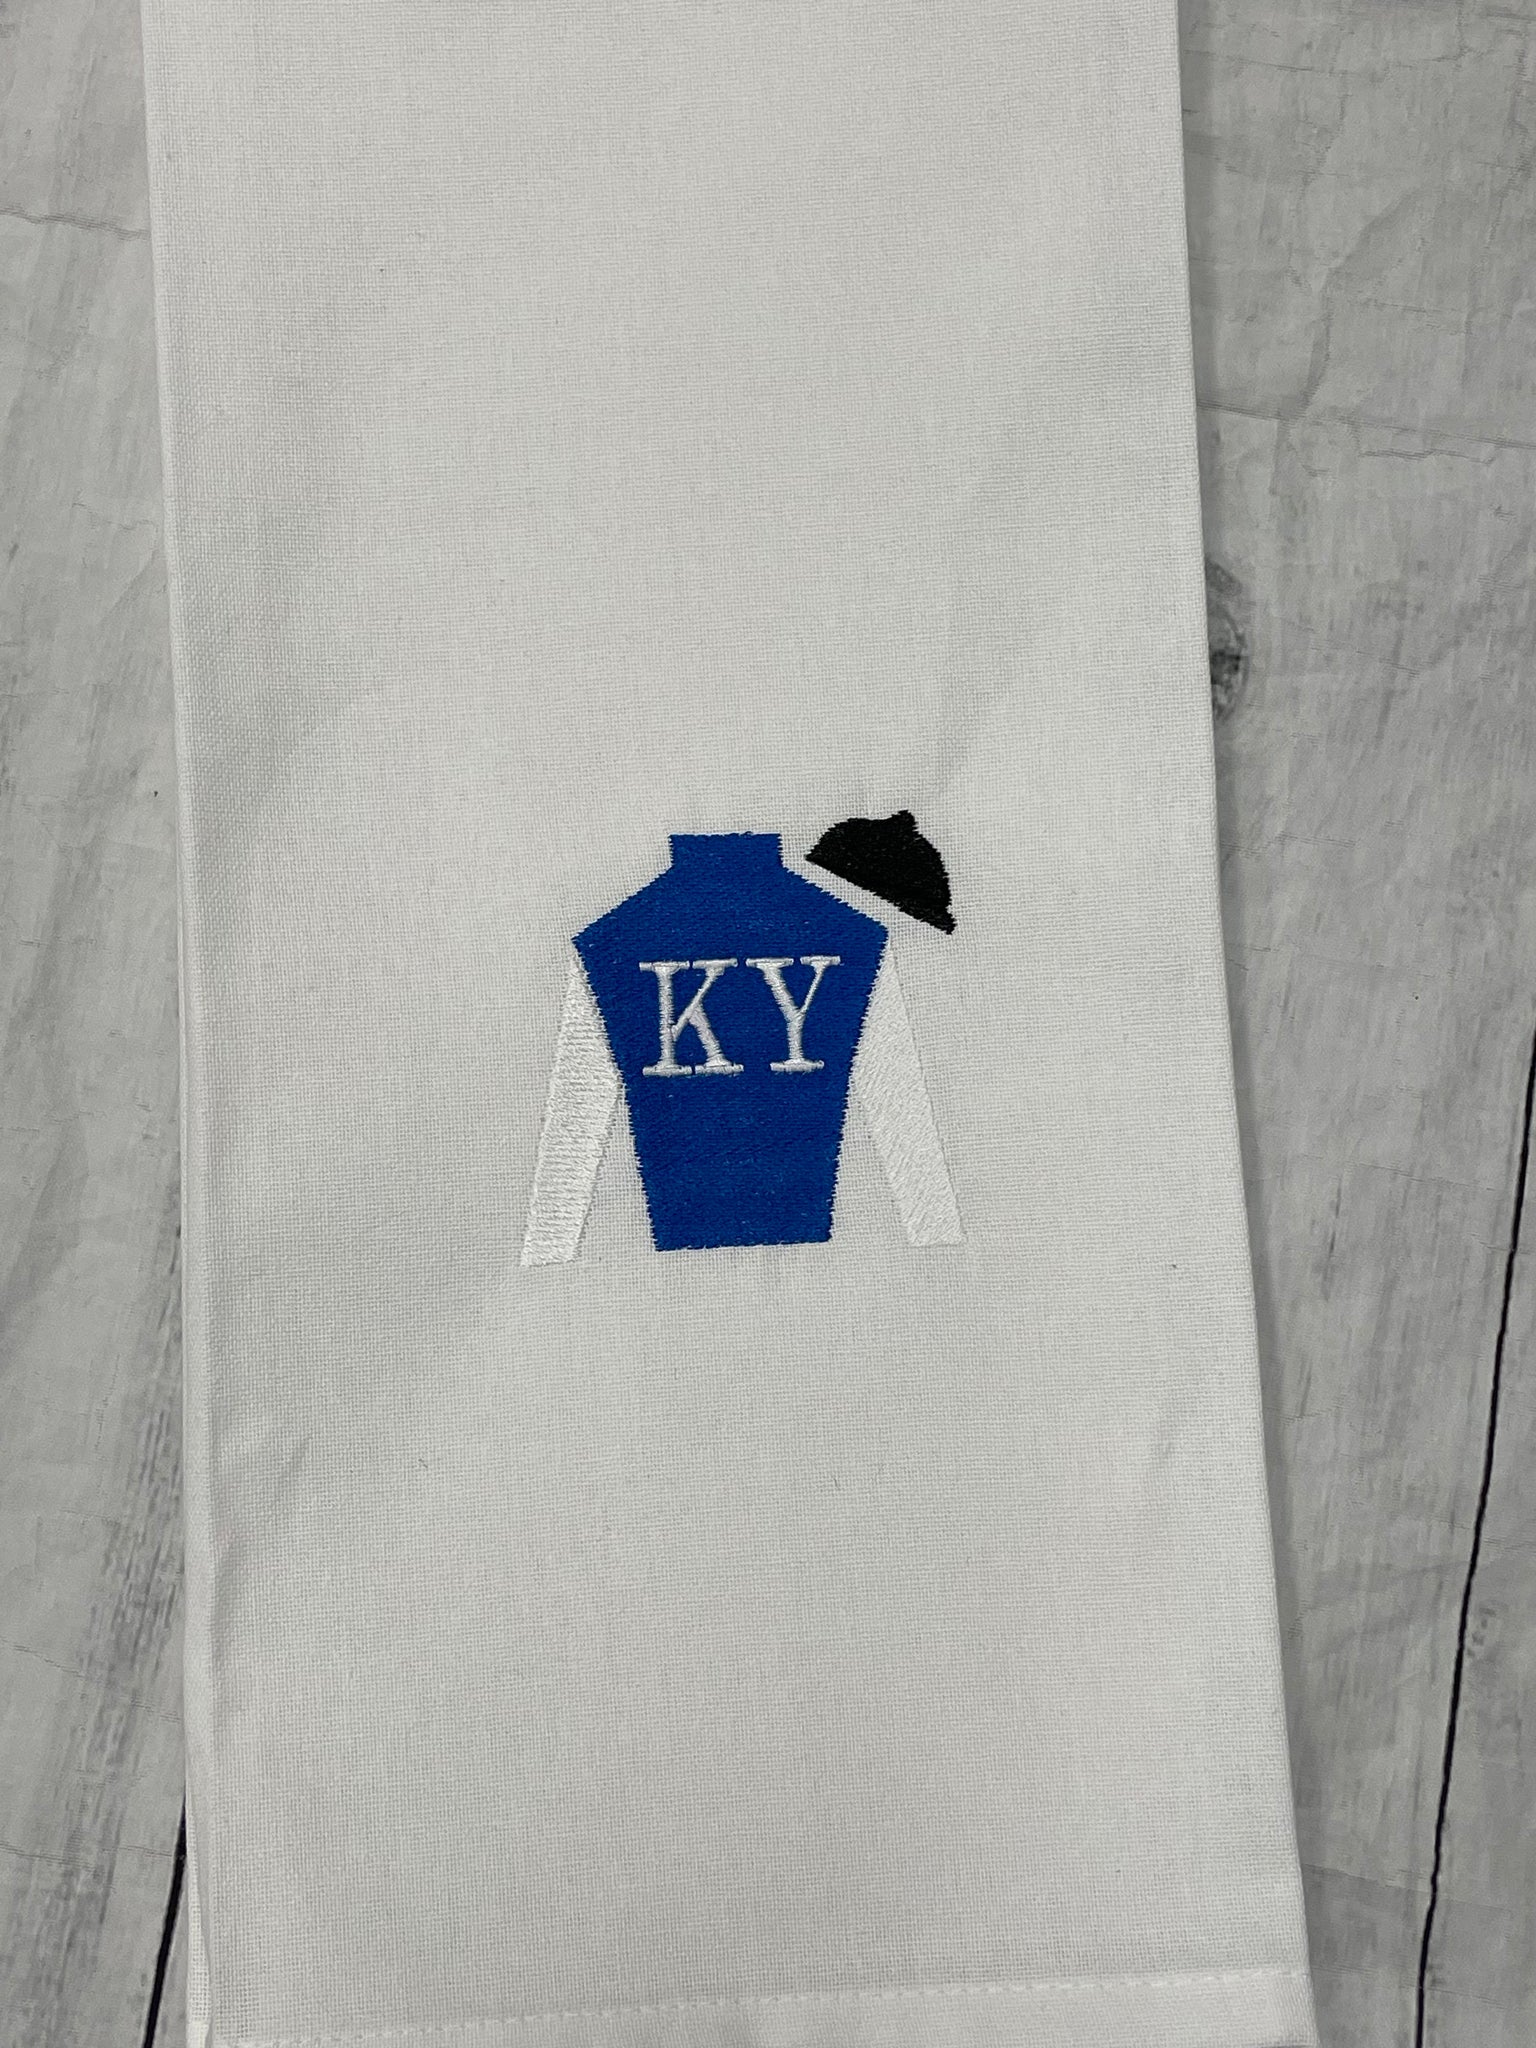 Jockey Silk Hand Towel - Royal Kentucky Derby Jockey Silks